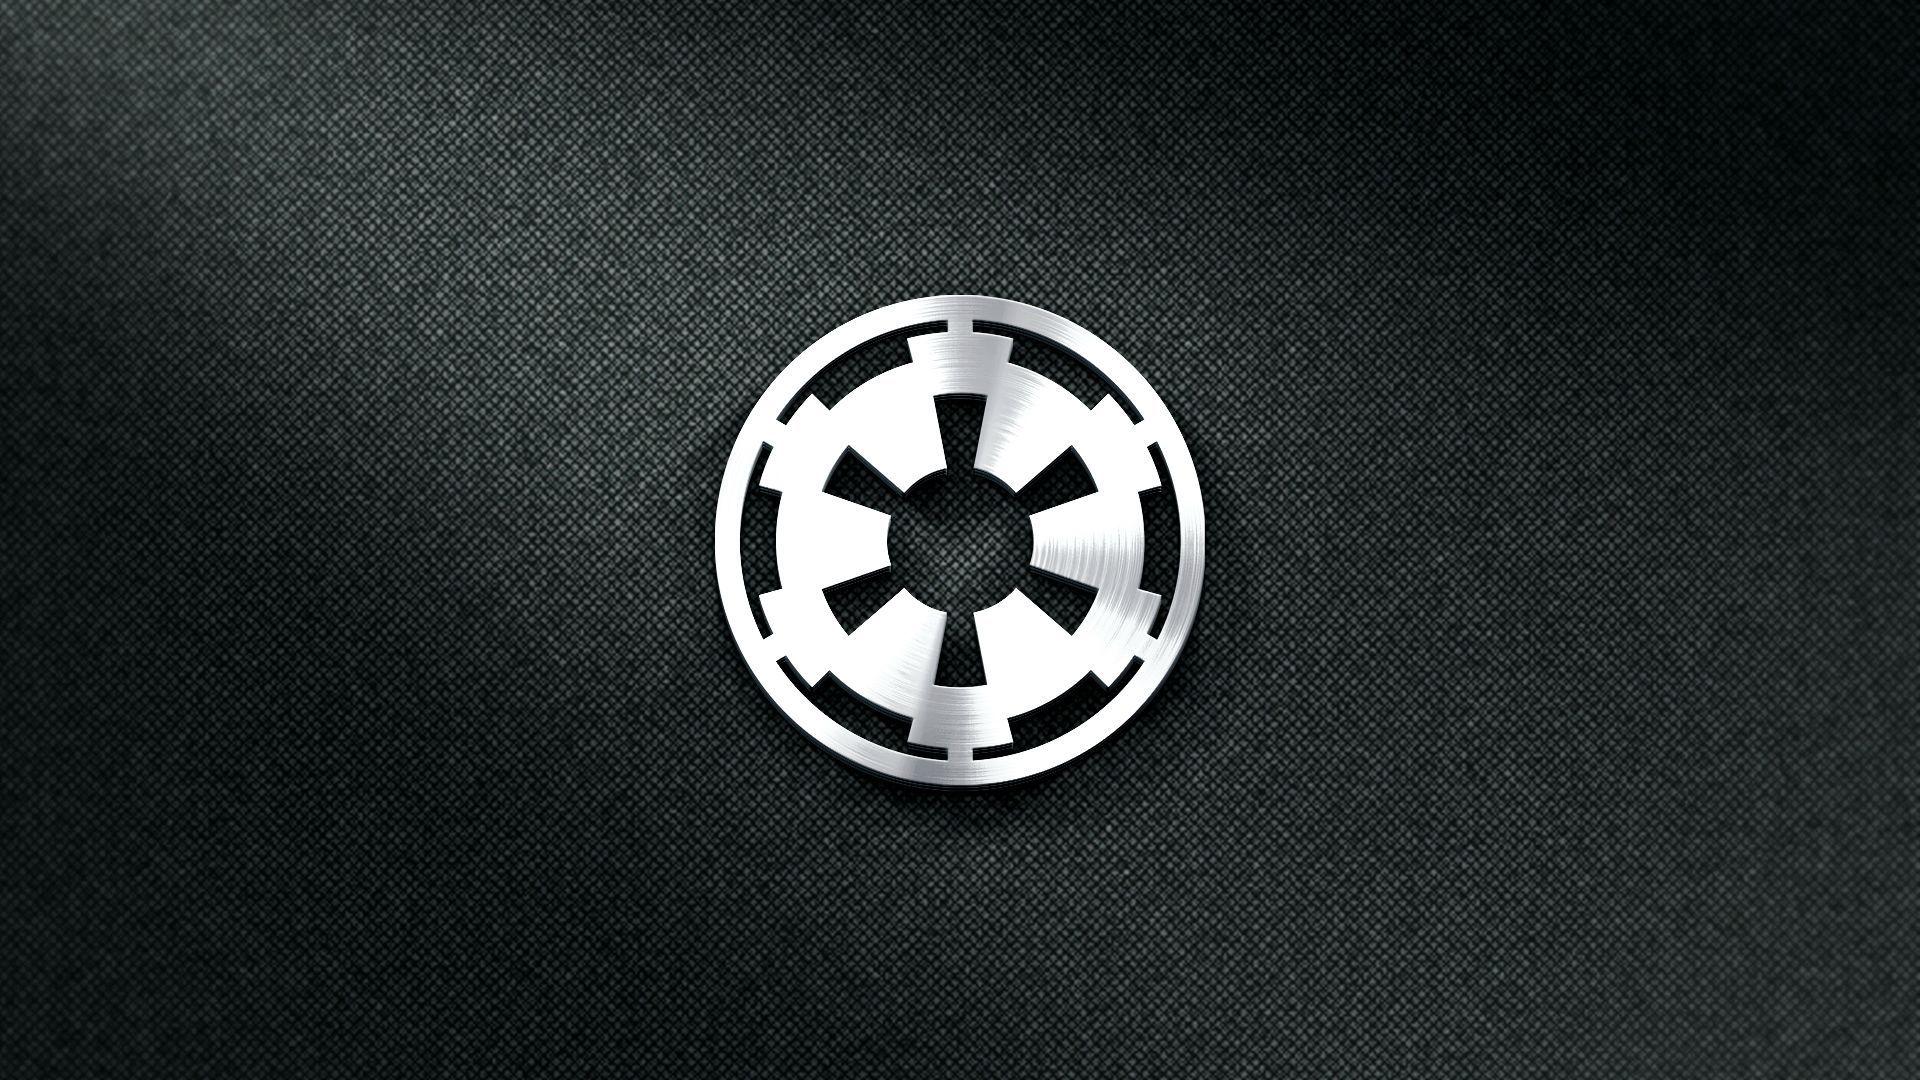 Star wars empire wallpaper high definition For Desktop